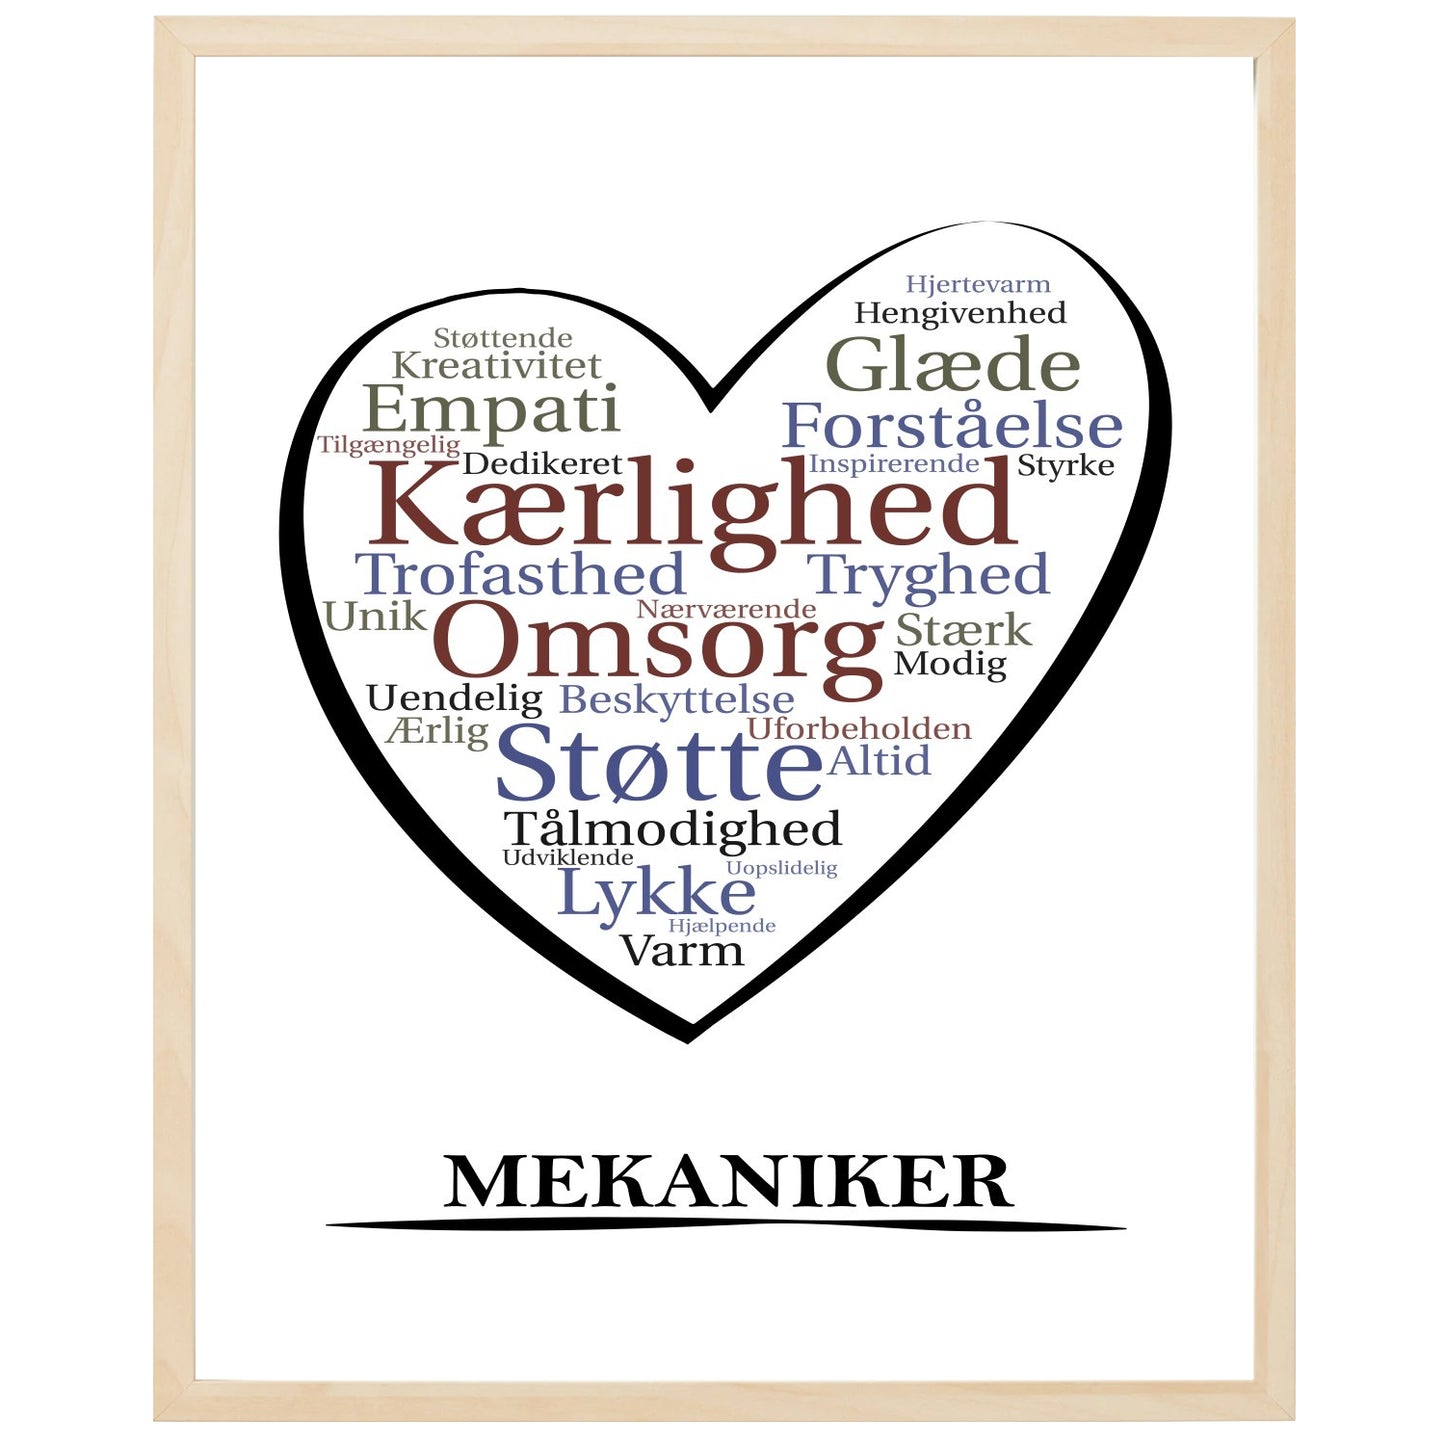 En plakat med overskriften Mekaniker, et hjerte og indeni hjertet mange positive ord som beskriver en Mekaniker